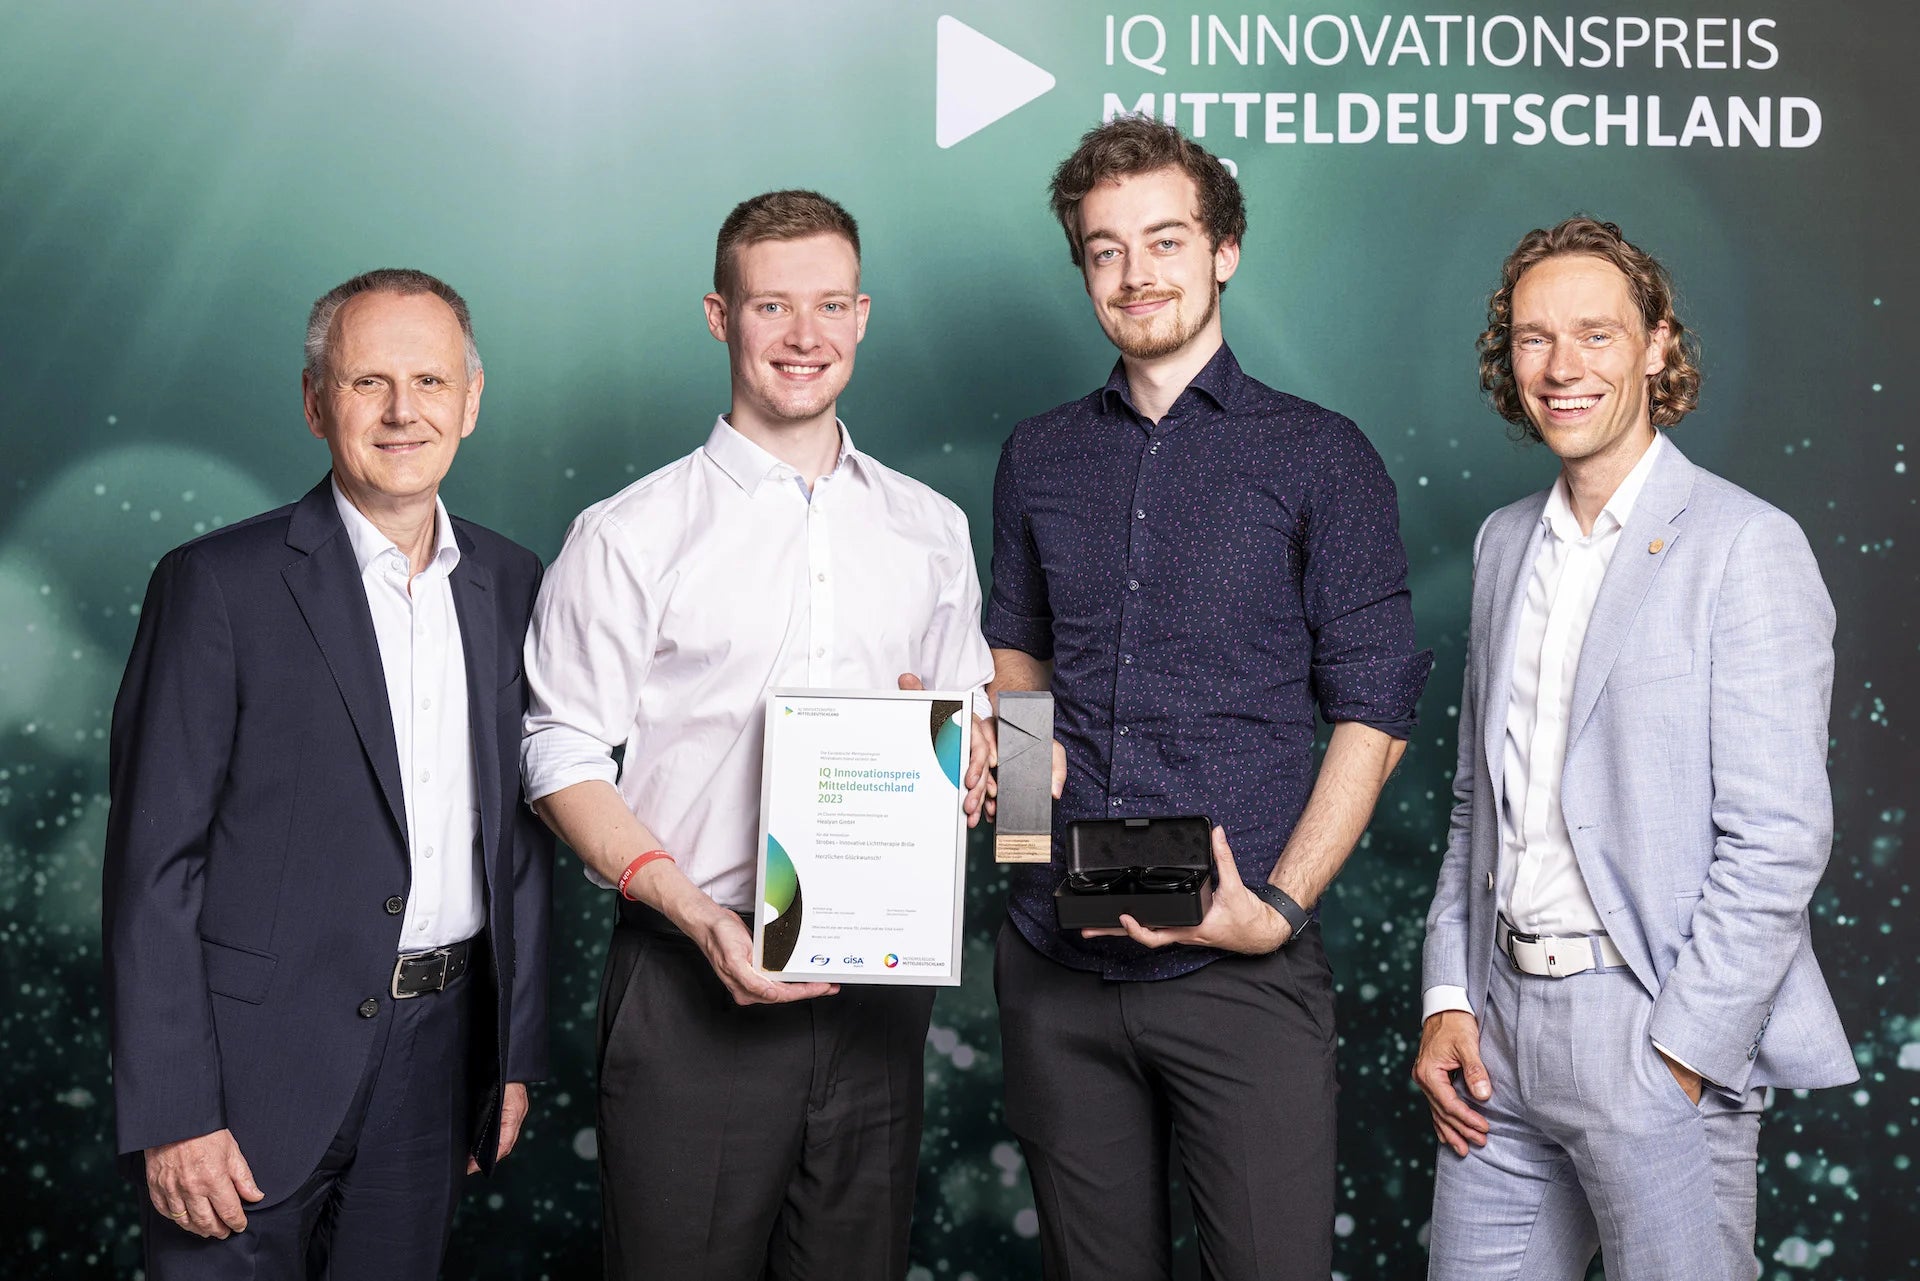 Healyan team holding the award for first place at IQ Innovationspreis Mitteldeutschland